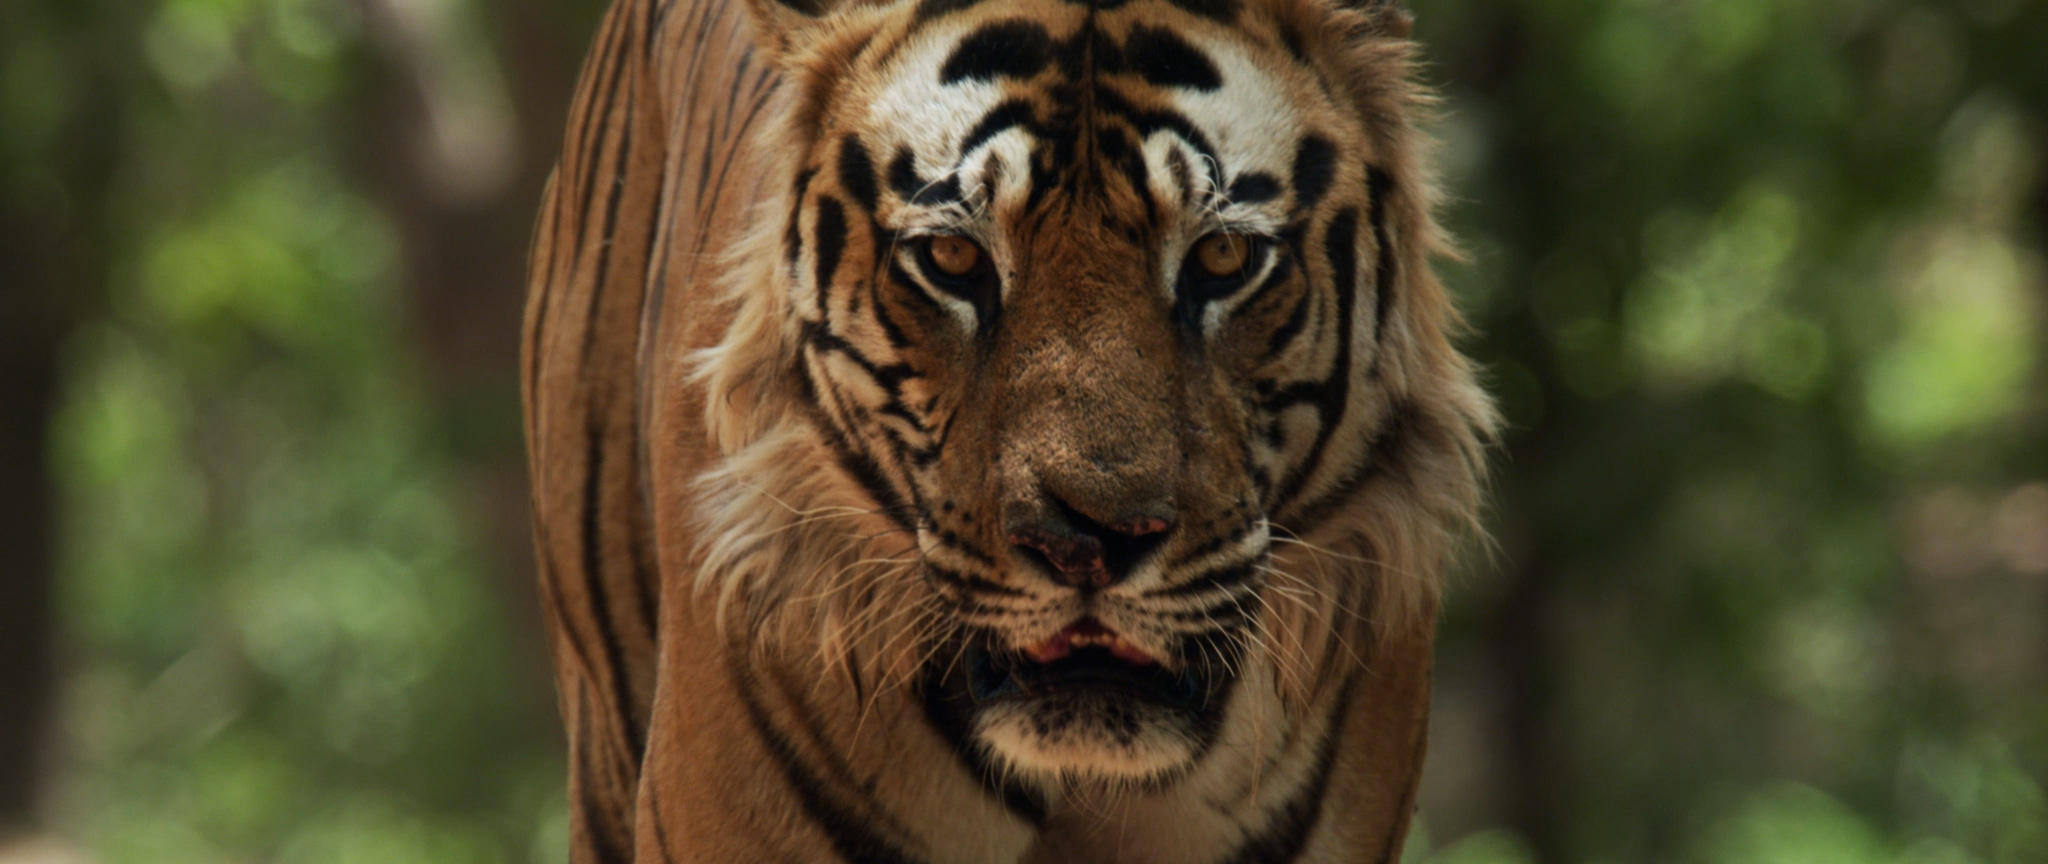 Waterbear | Not A Pet | Tigers